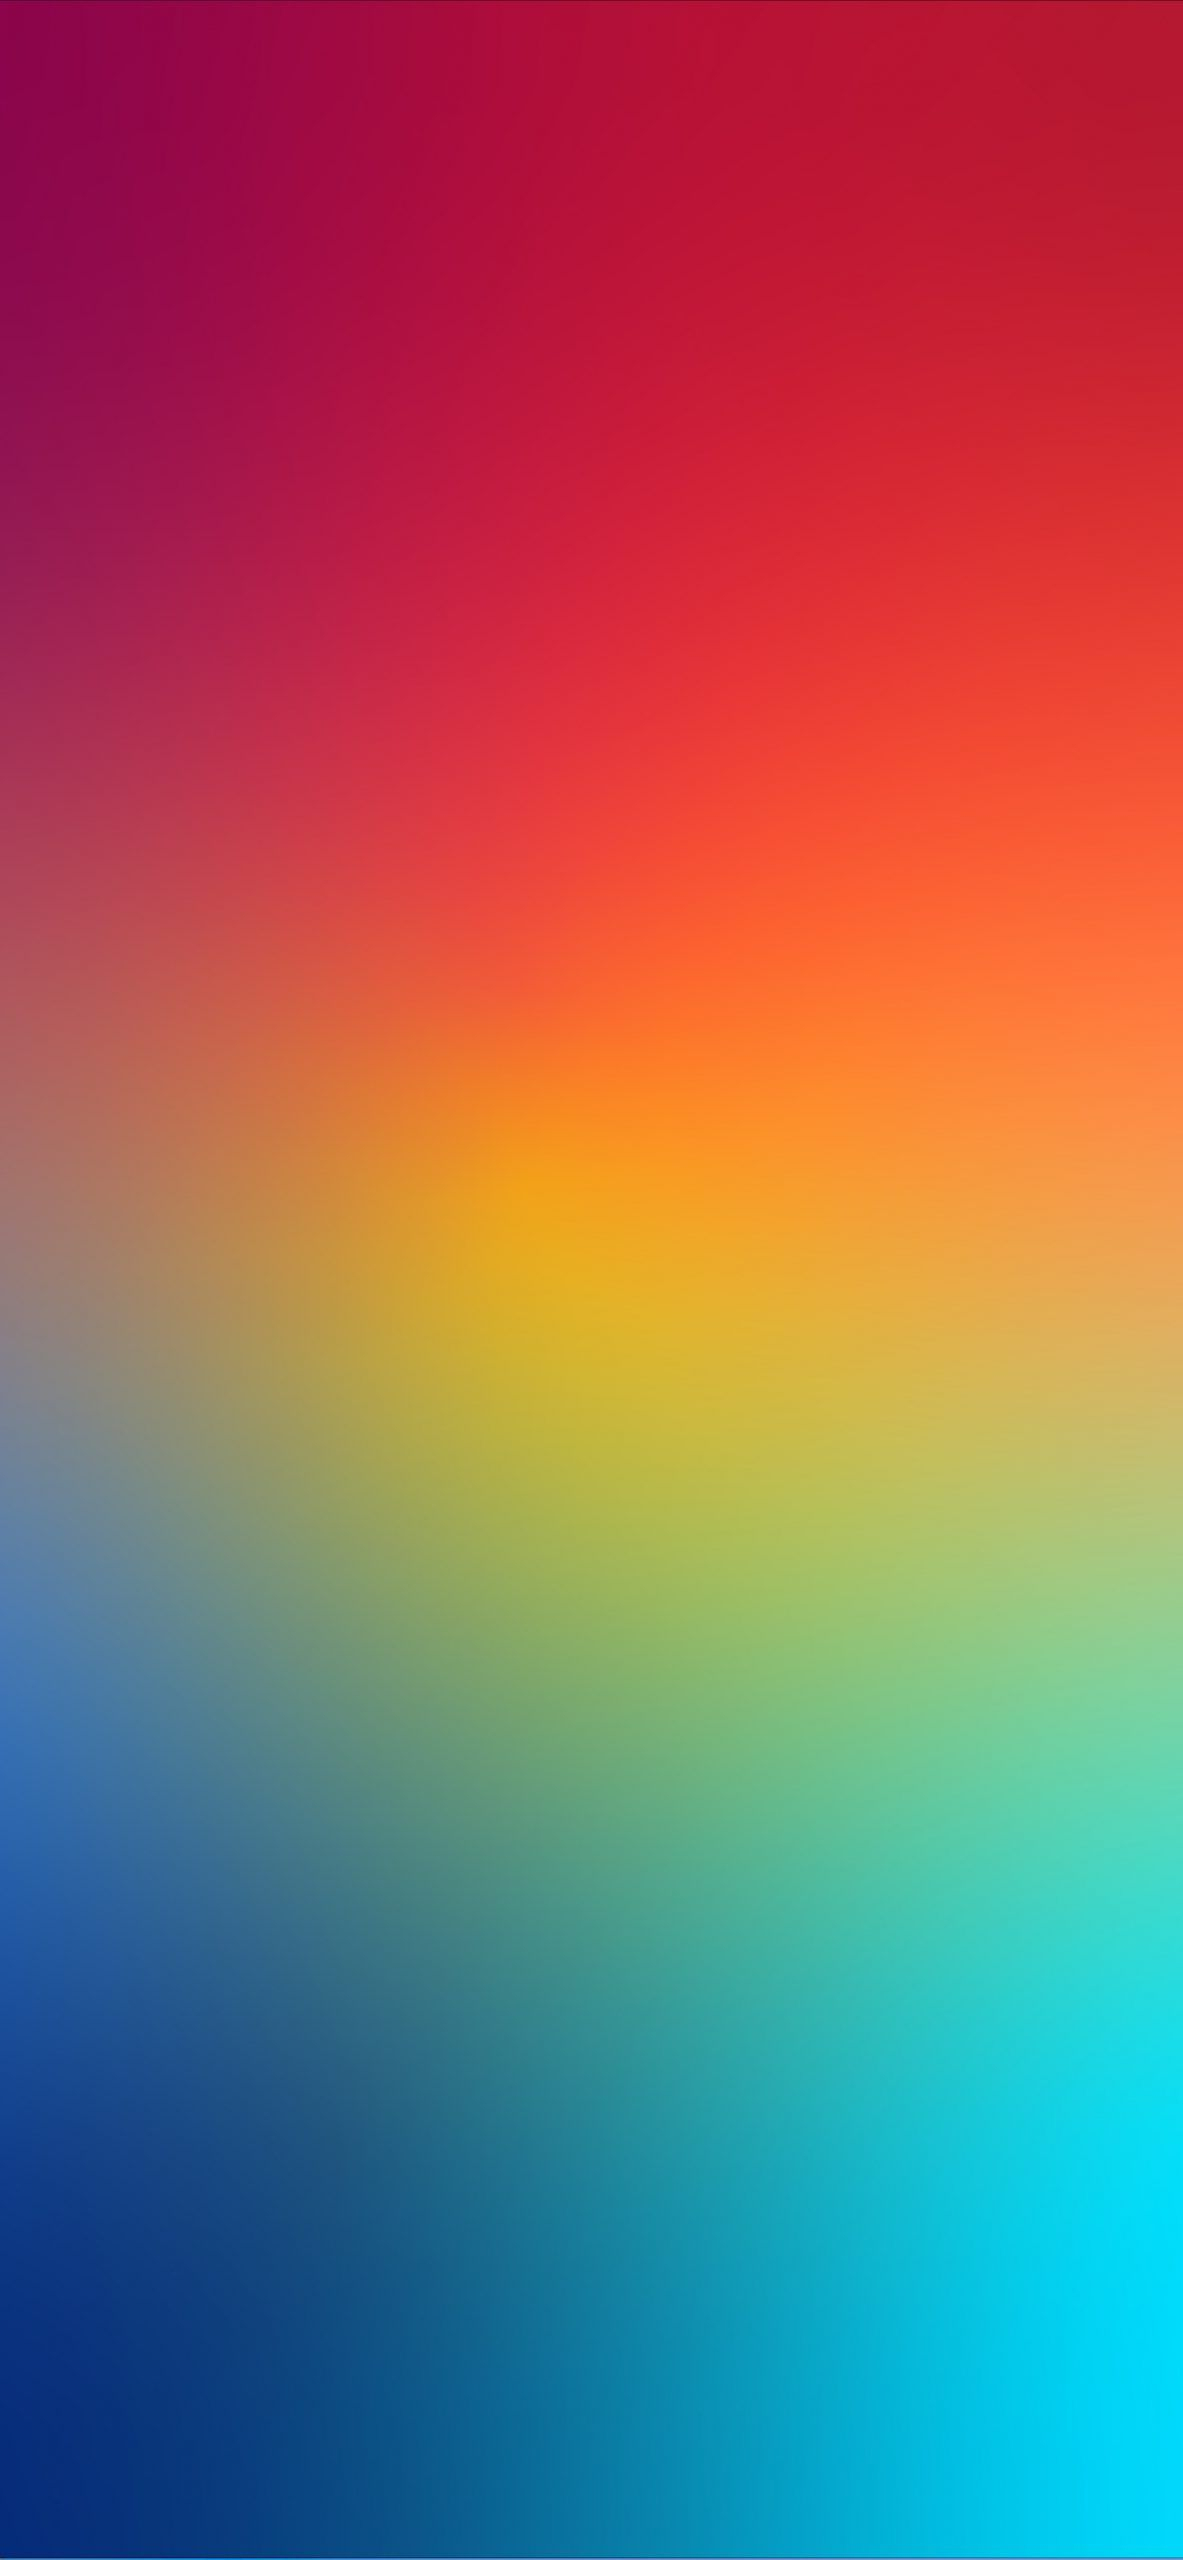 1183x2560 Rainbow gradient by @Hk3ToN on Twitter | Rainbow wallpaper iphone, Color wallpaper iphone, Apple logo wallpaper iphone